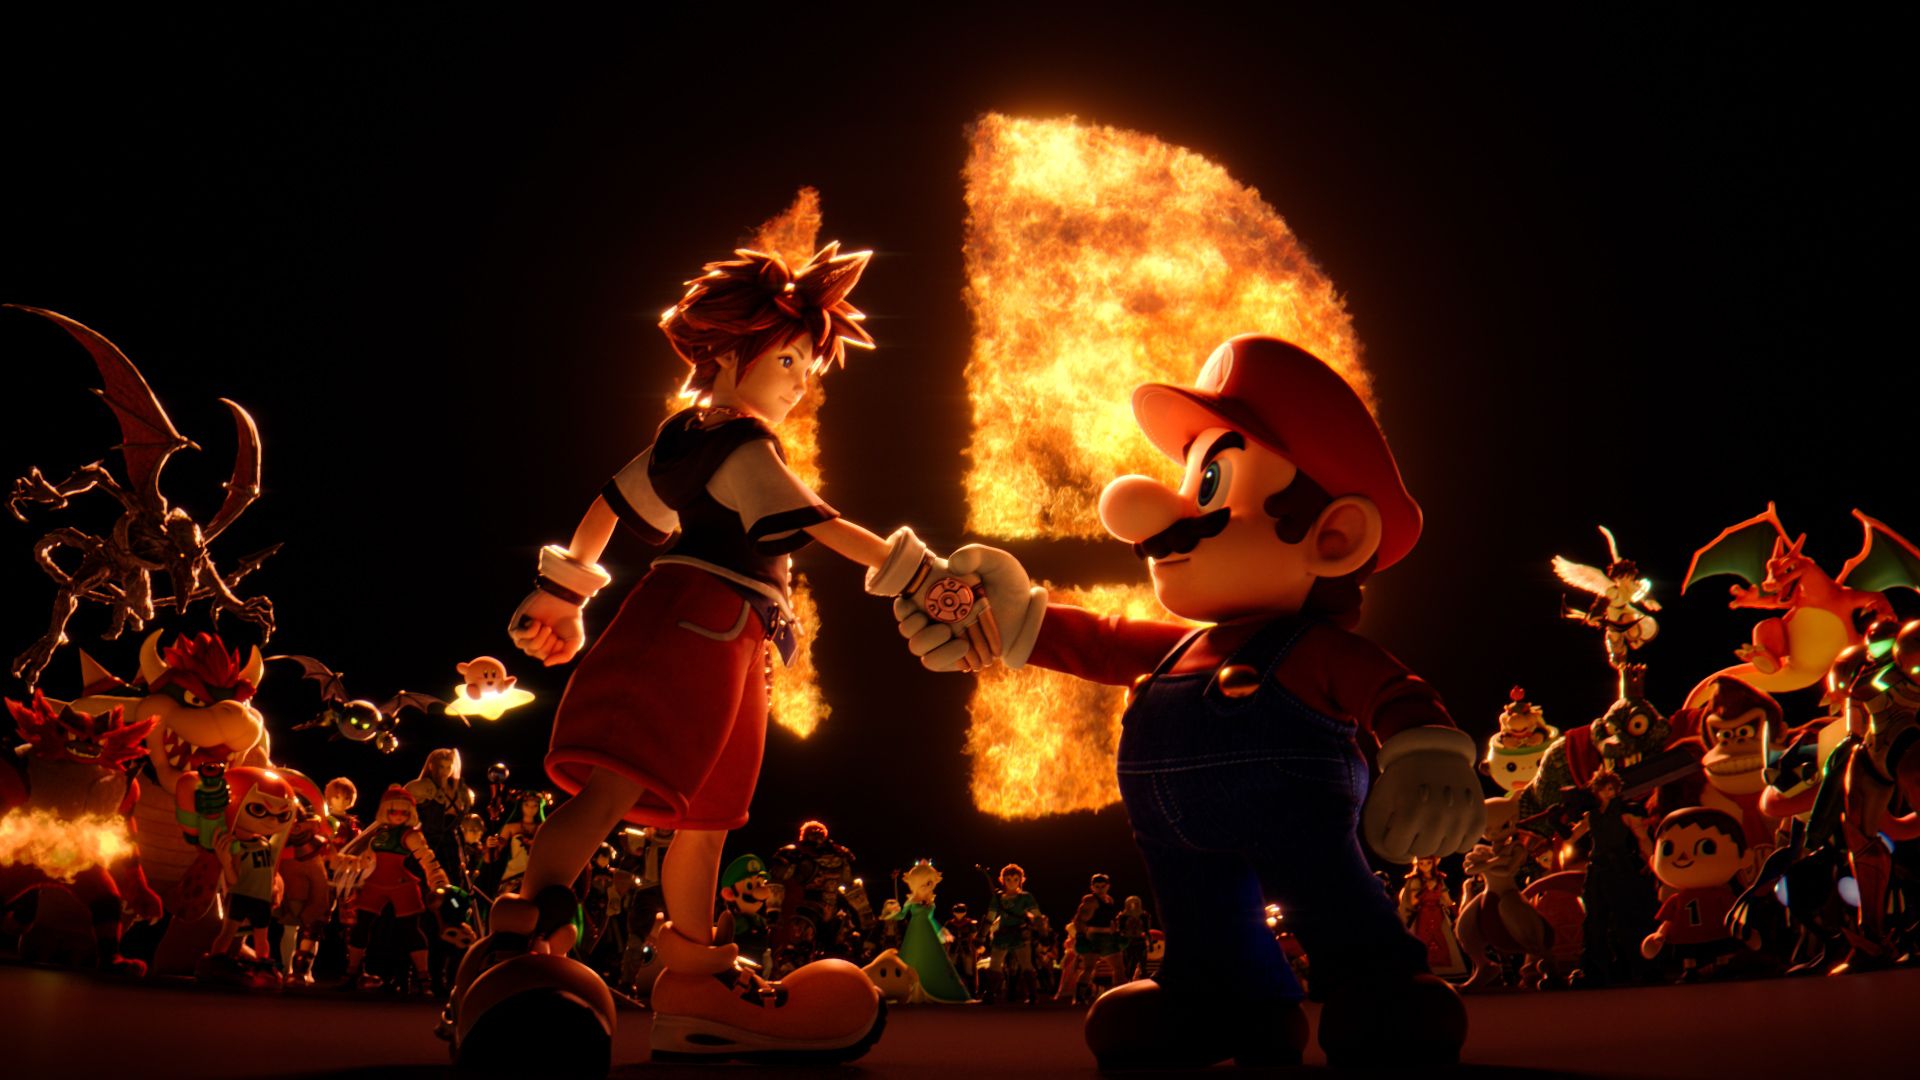 Digital illustration of Sora from Kingdom Hearts shaking hands with Super Mario